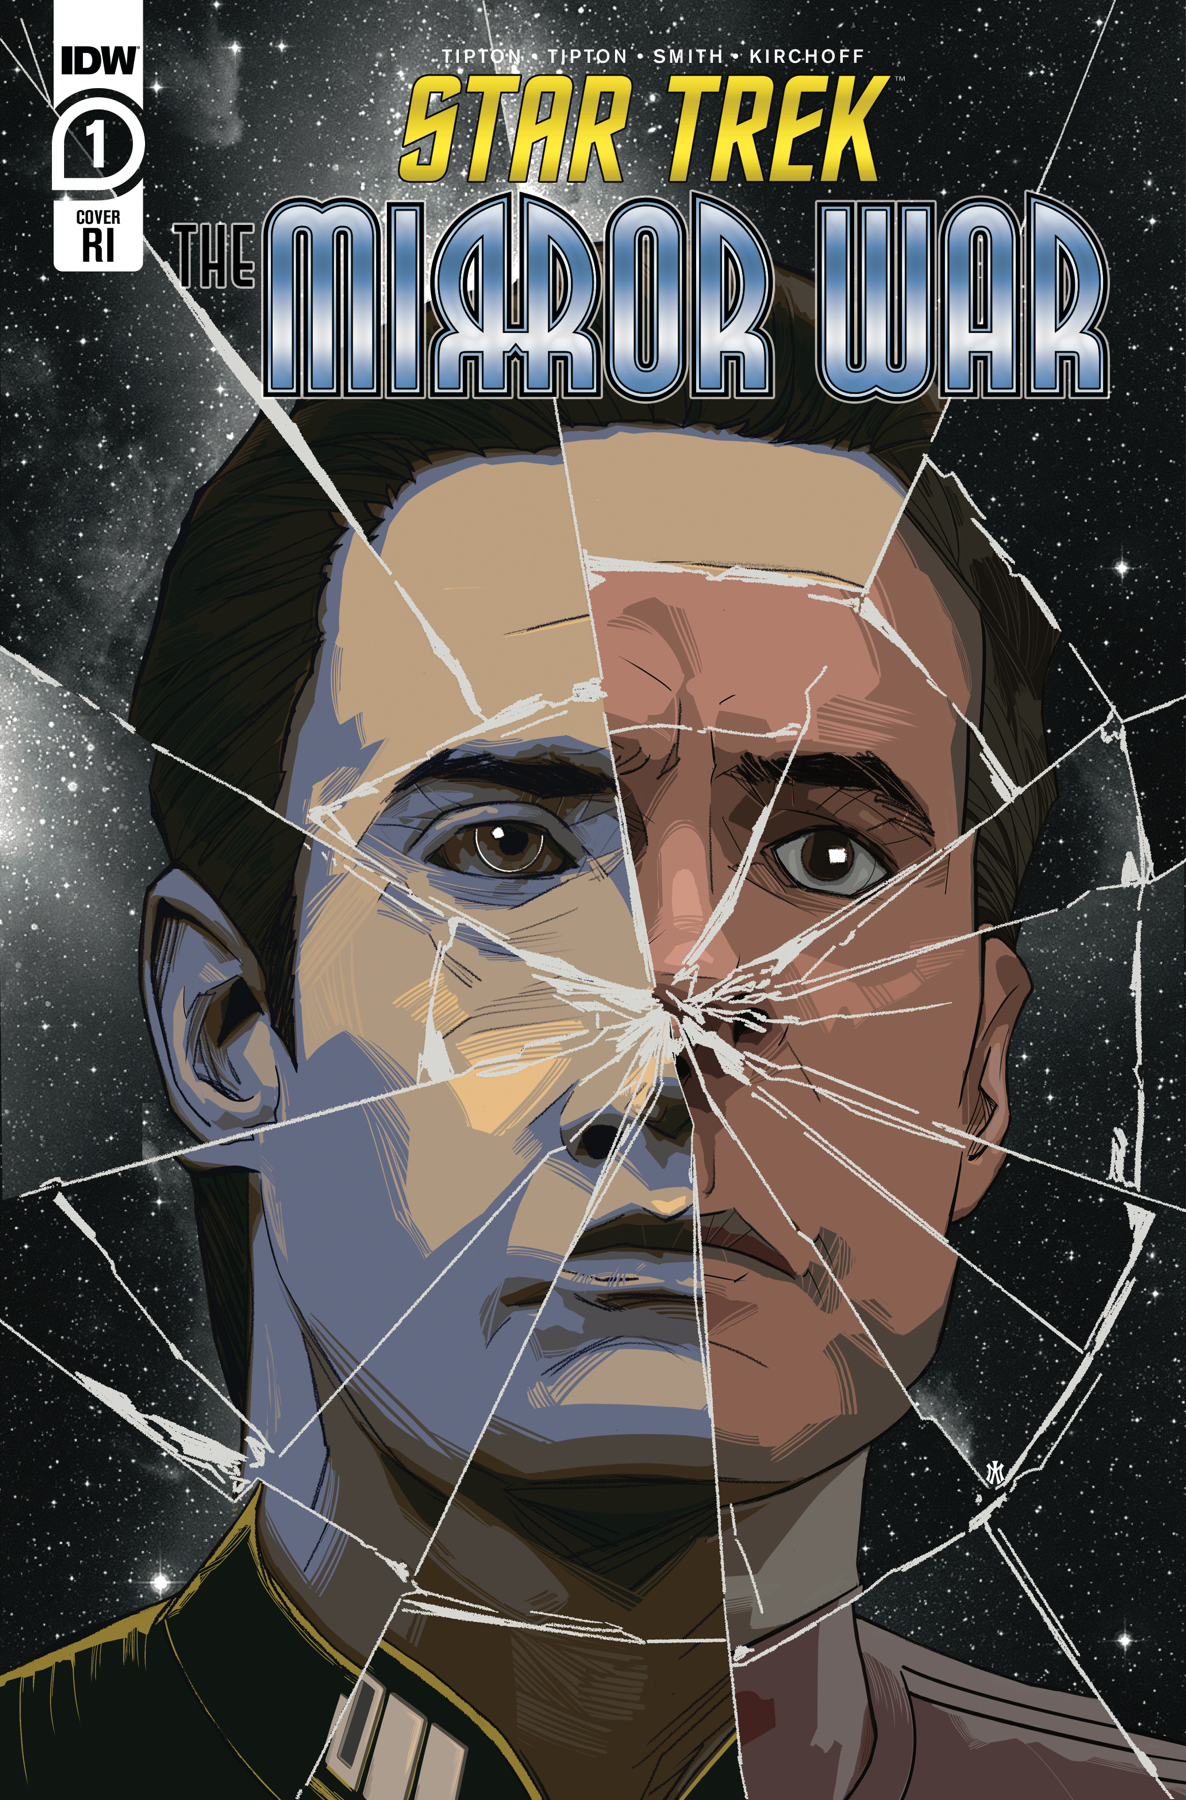 Star Trek Mirror War #1 Cover C 1 for 15 Incentive Alvarado